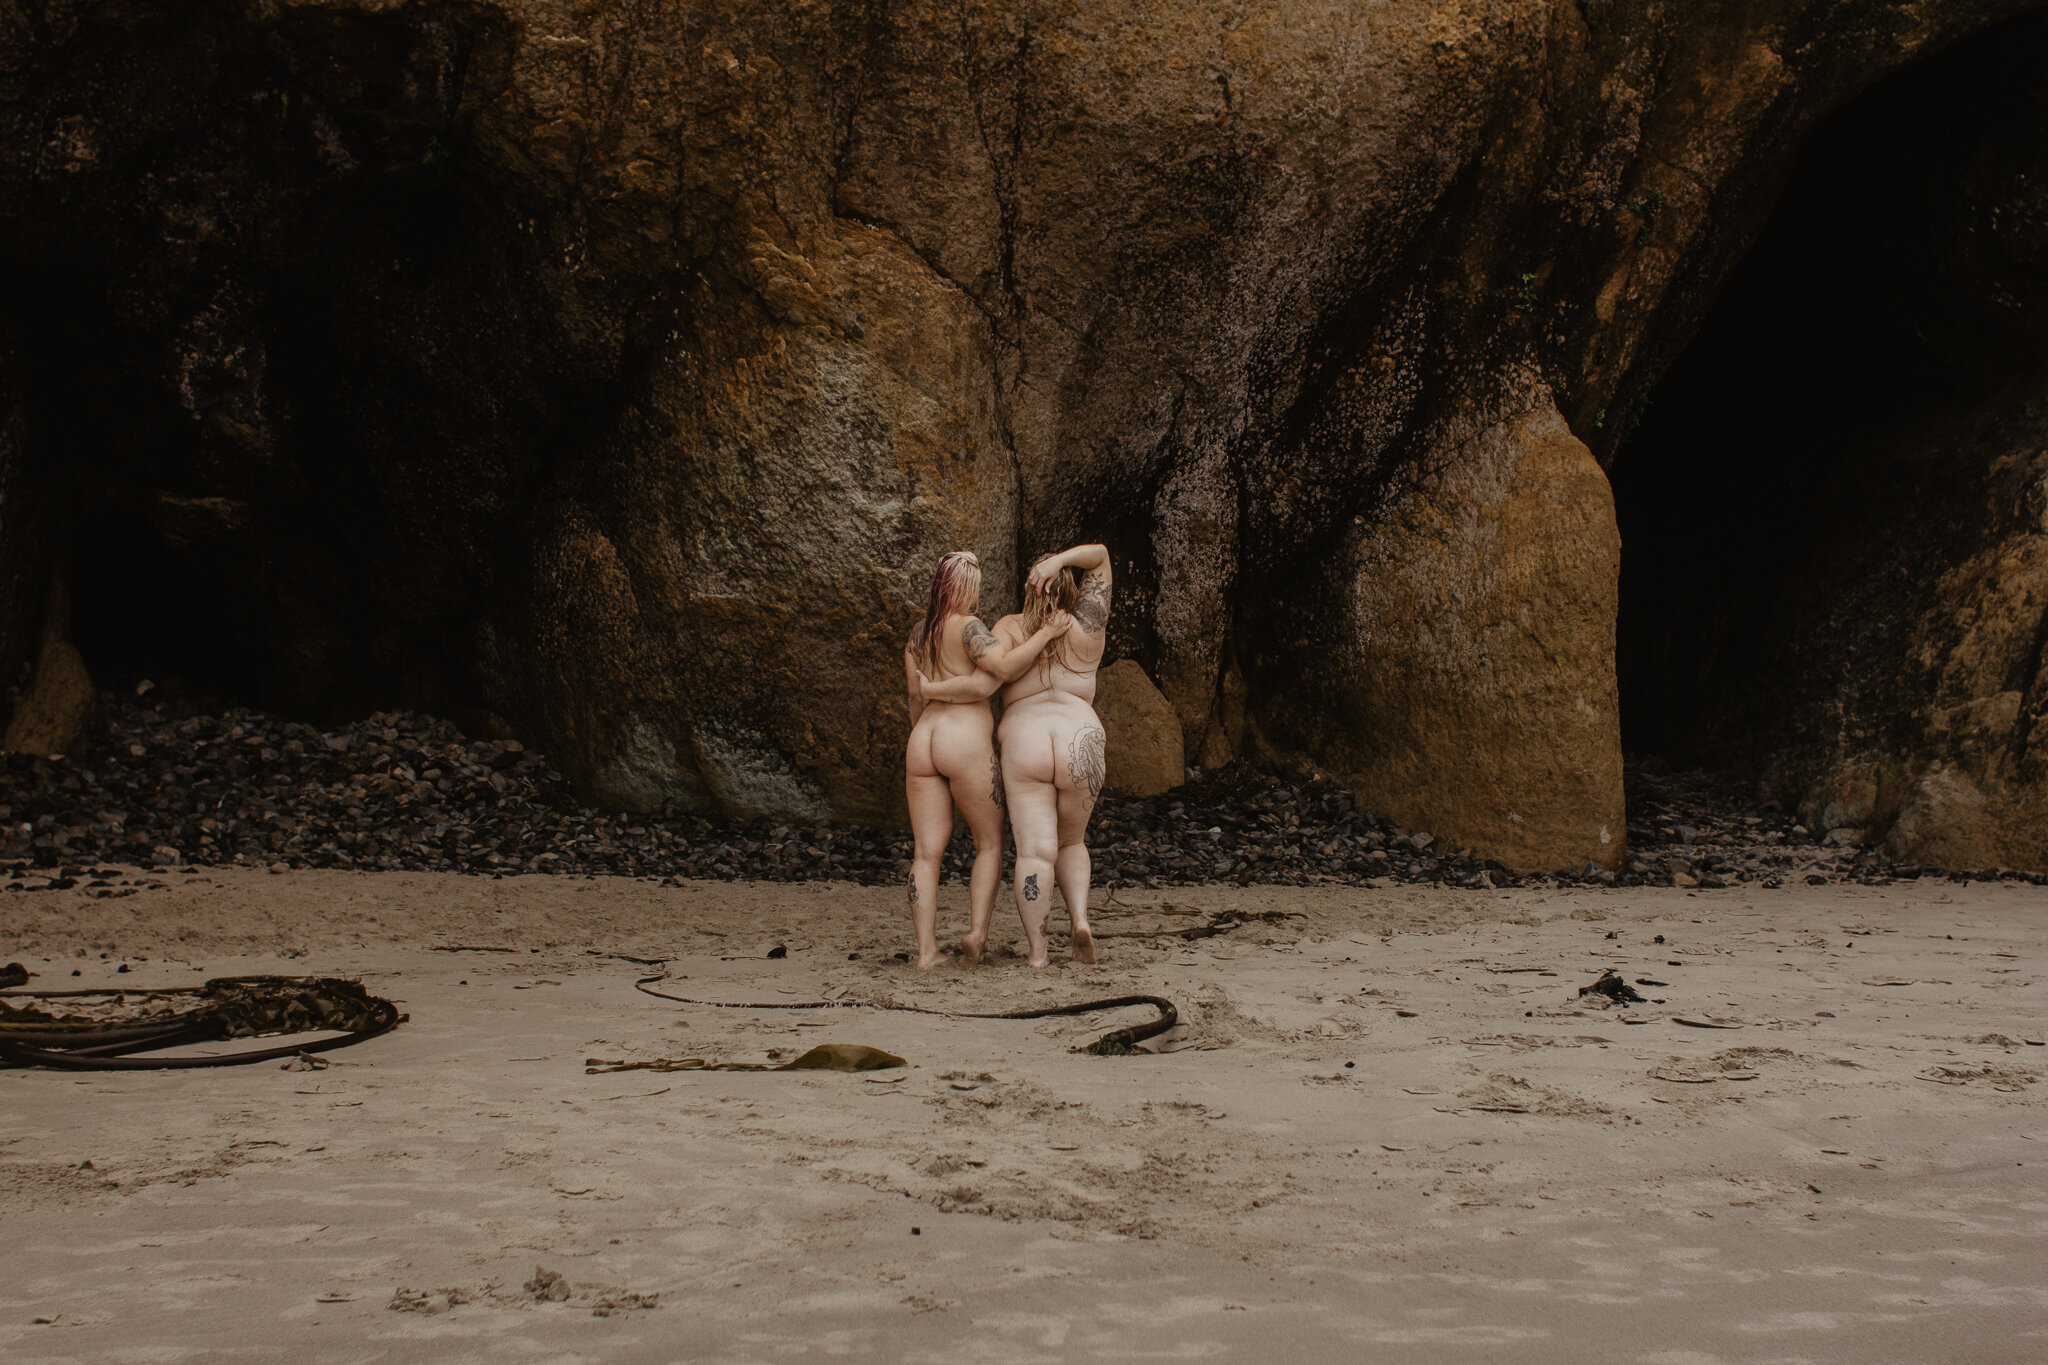 Naked lbgtq couple at beach